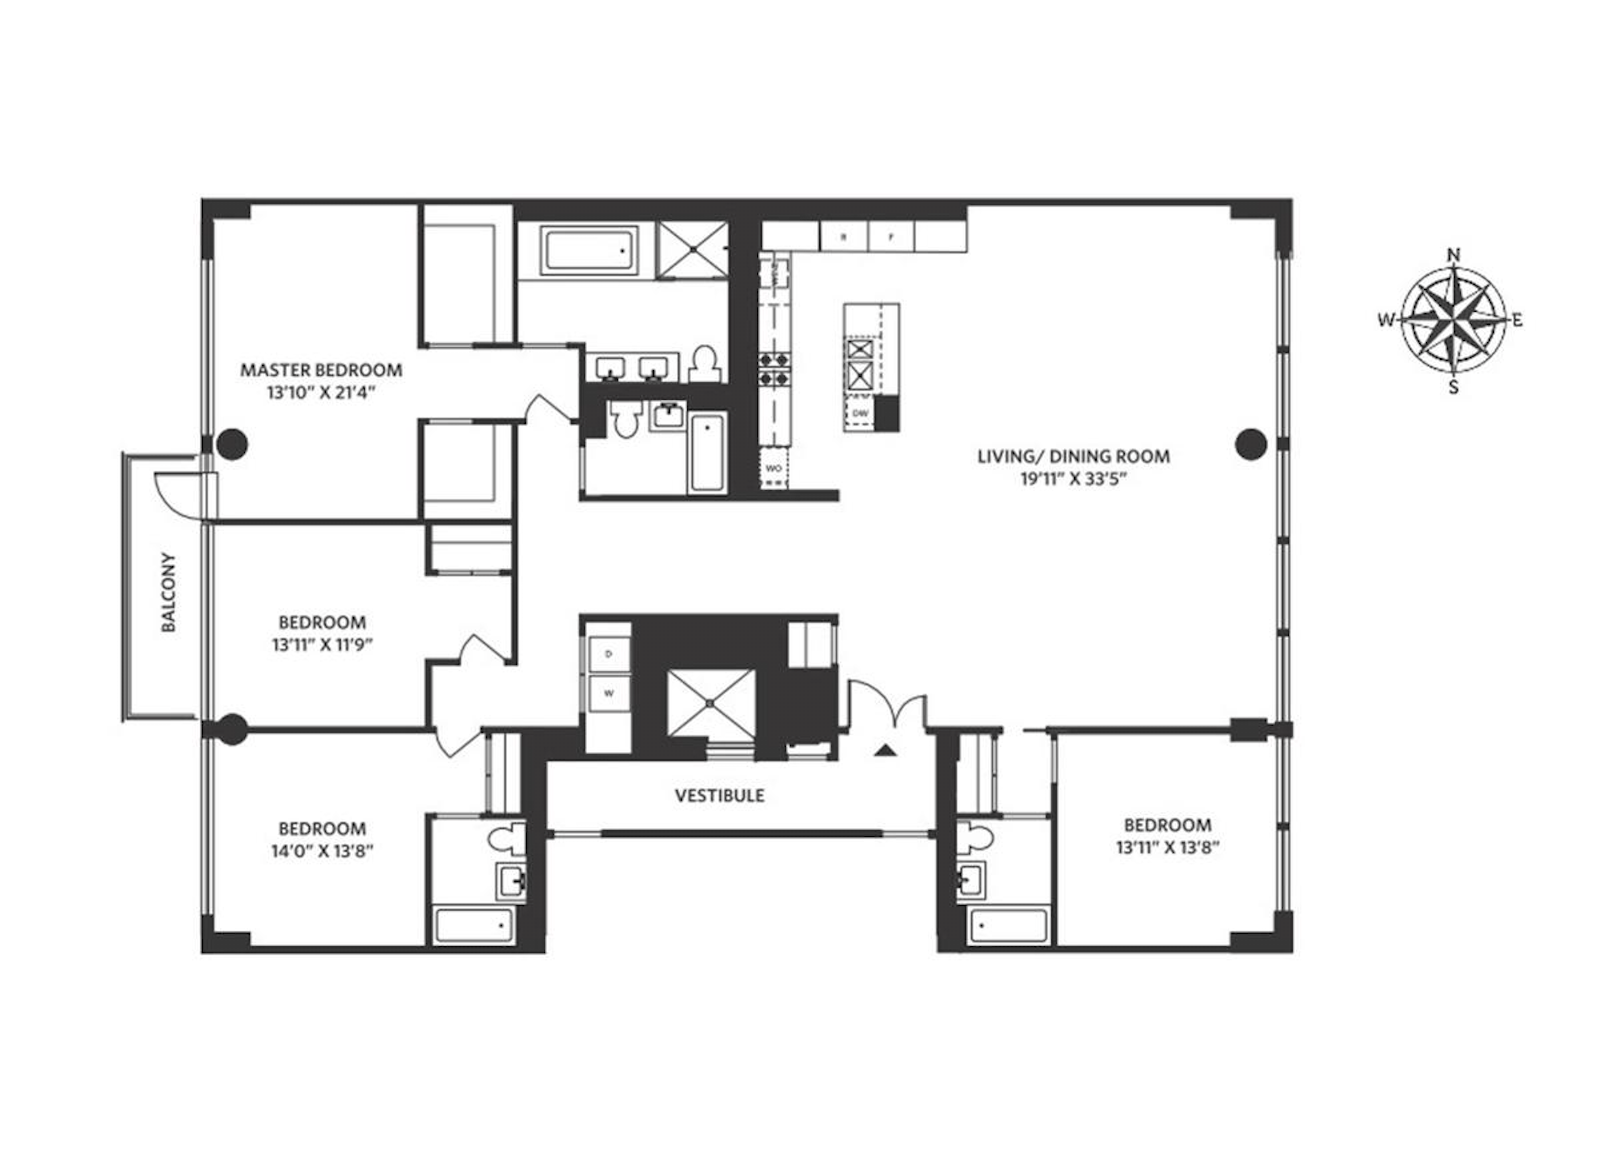 Floorplan for 139 Wooster Street, PH1